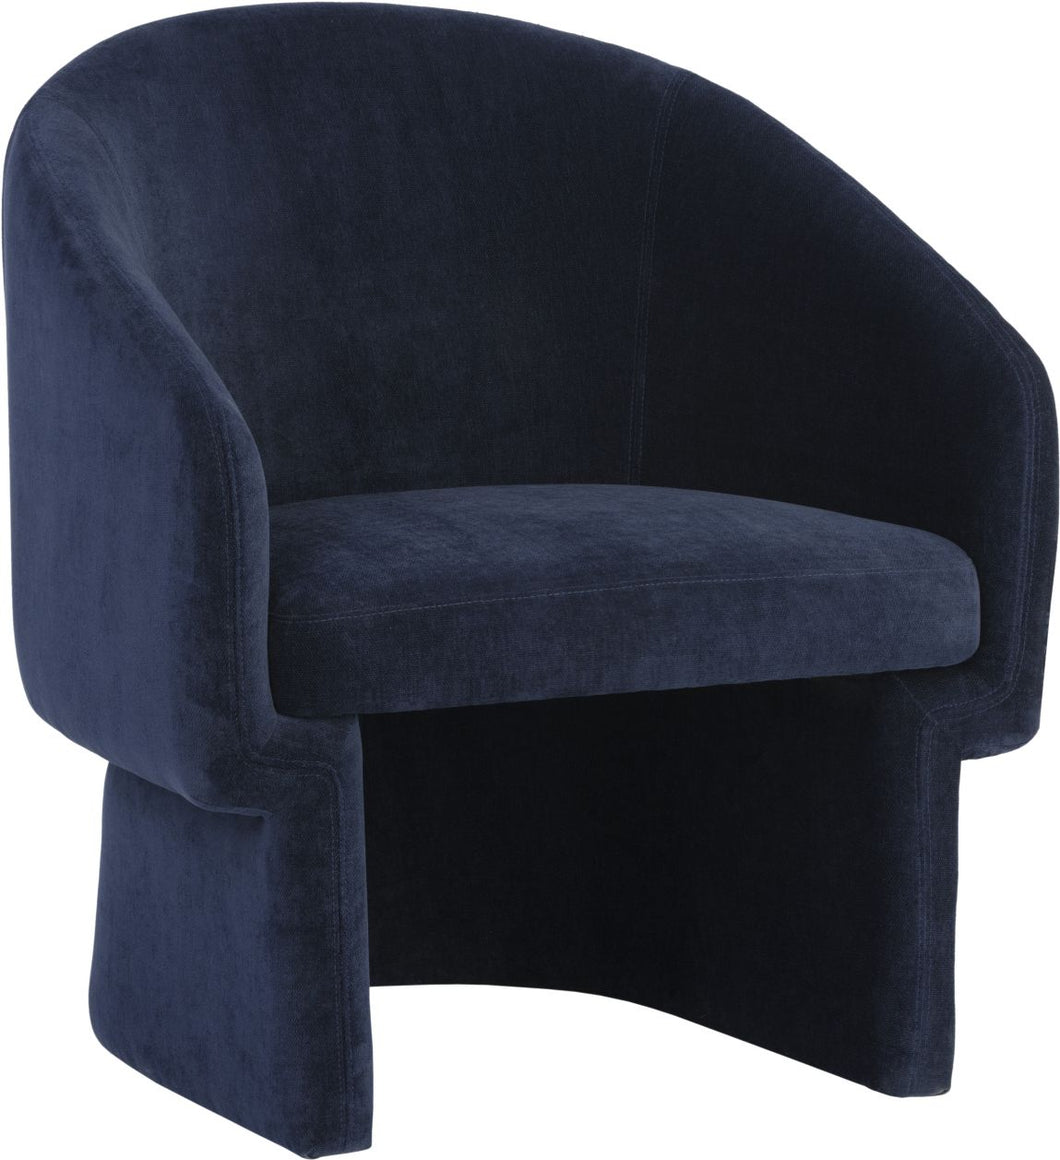 Lara Lounge Chair   2 colours